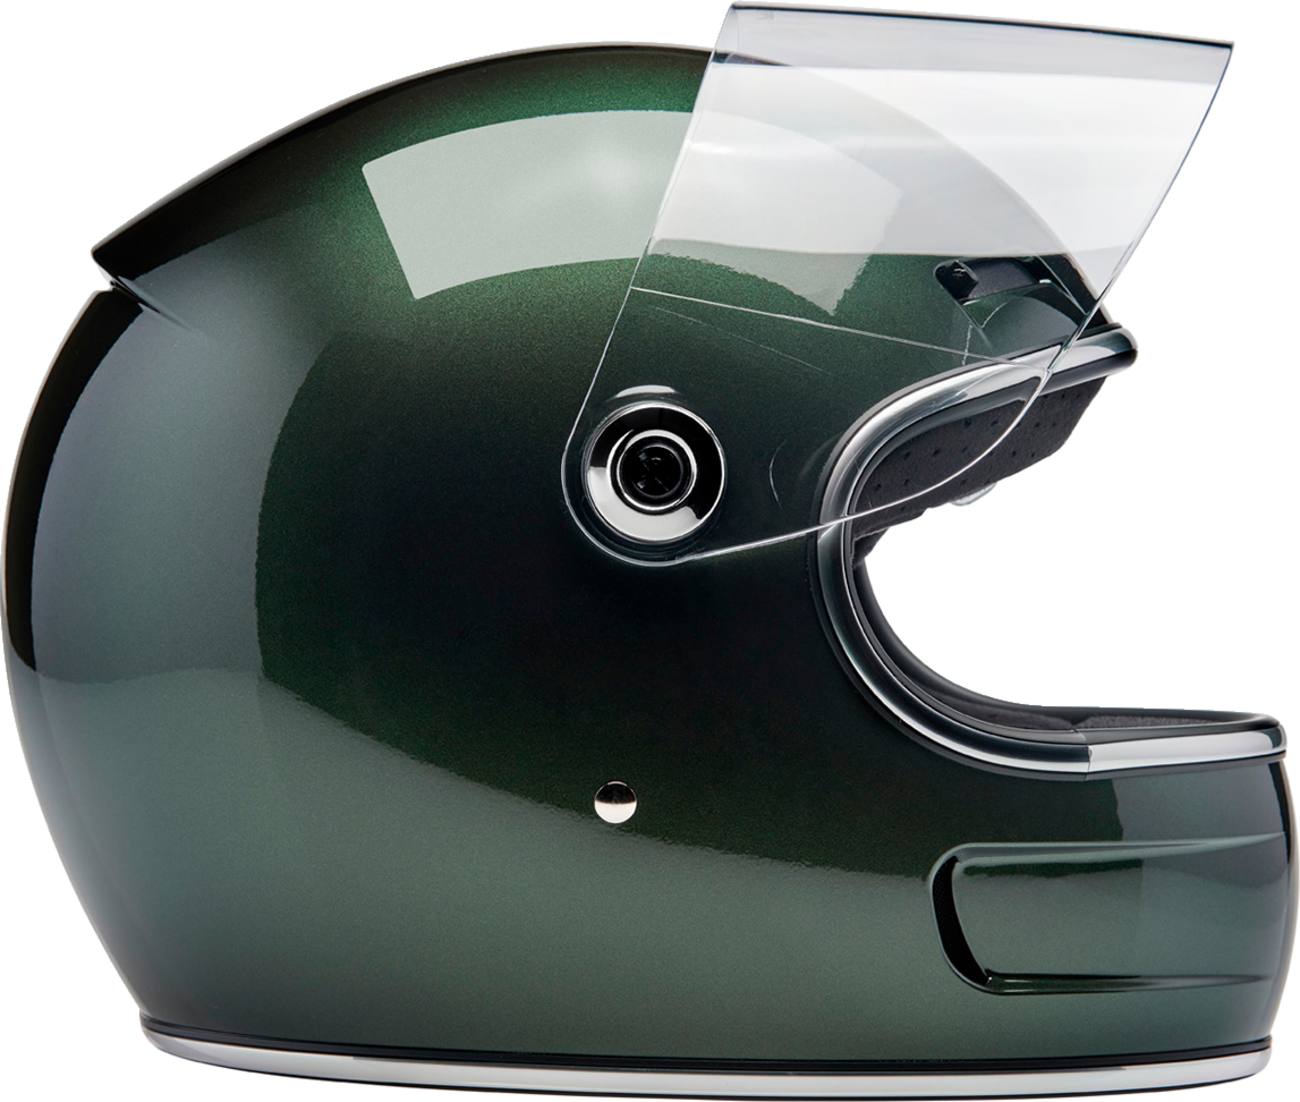 BILTWELL Gringo SV Helmet - Metallic Sierra Green - XS 1006-324-501